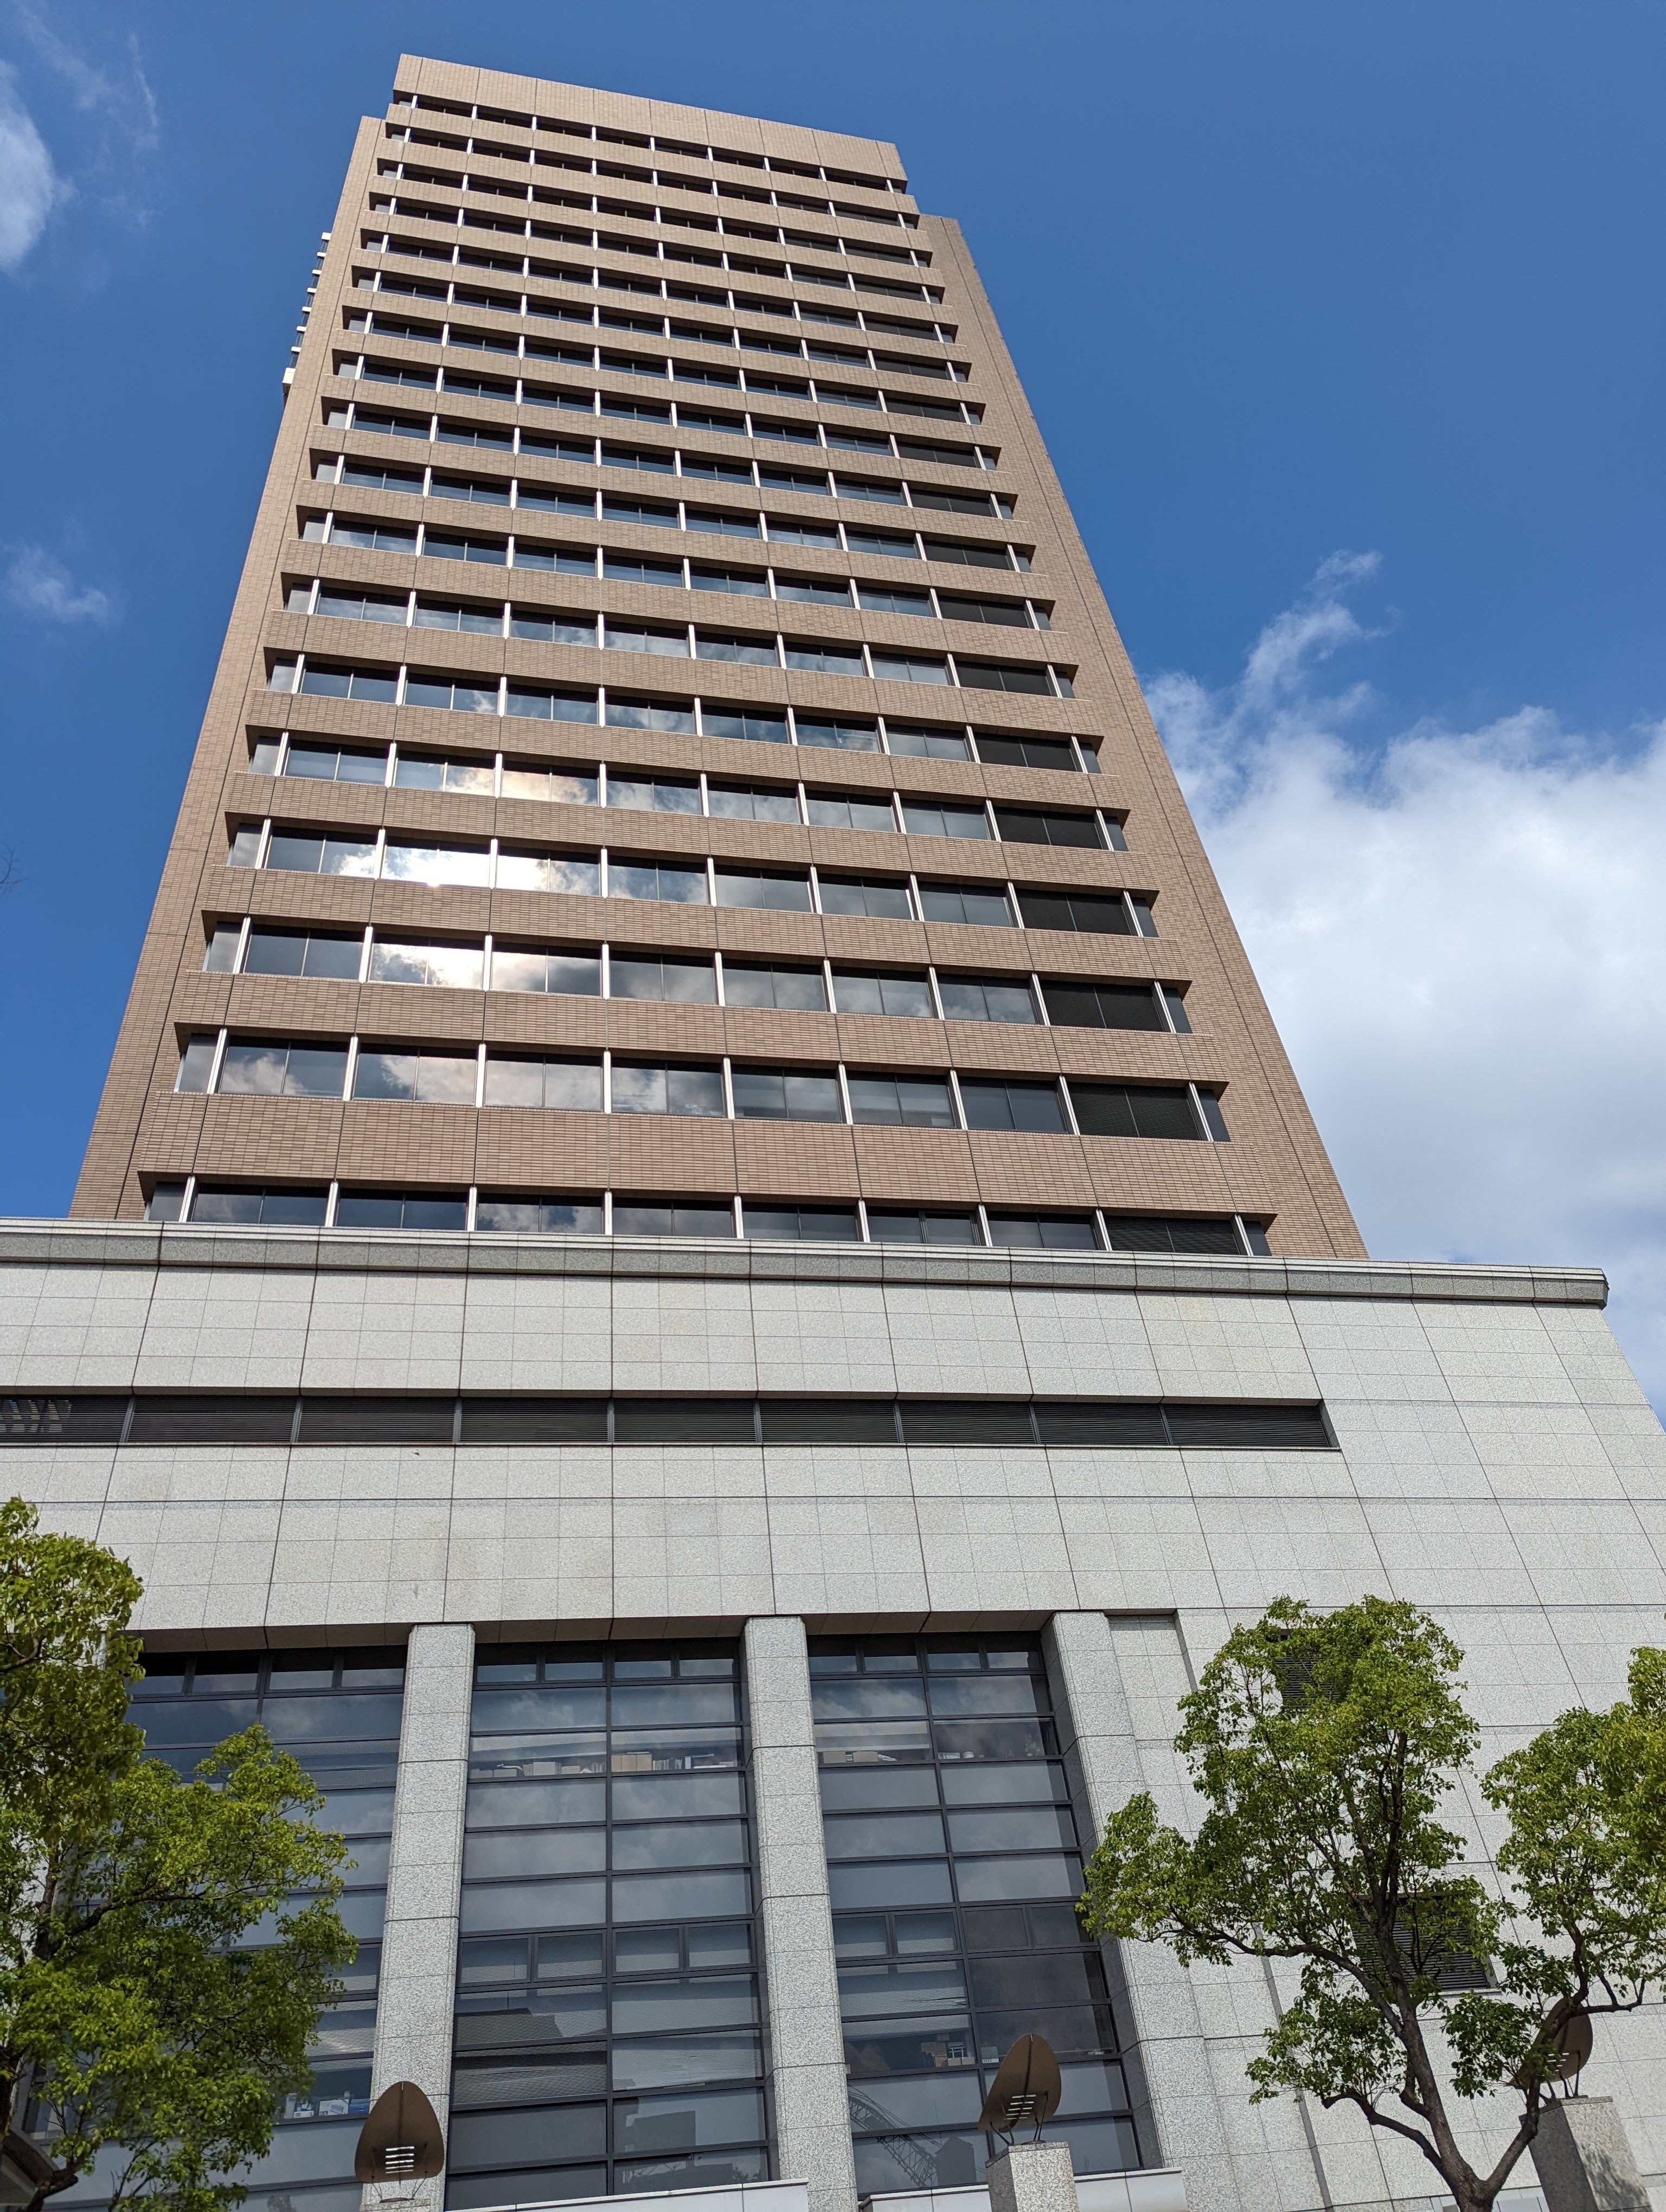 HigashiOsaka City Hall